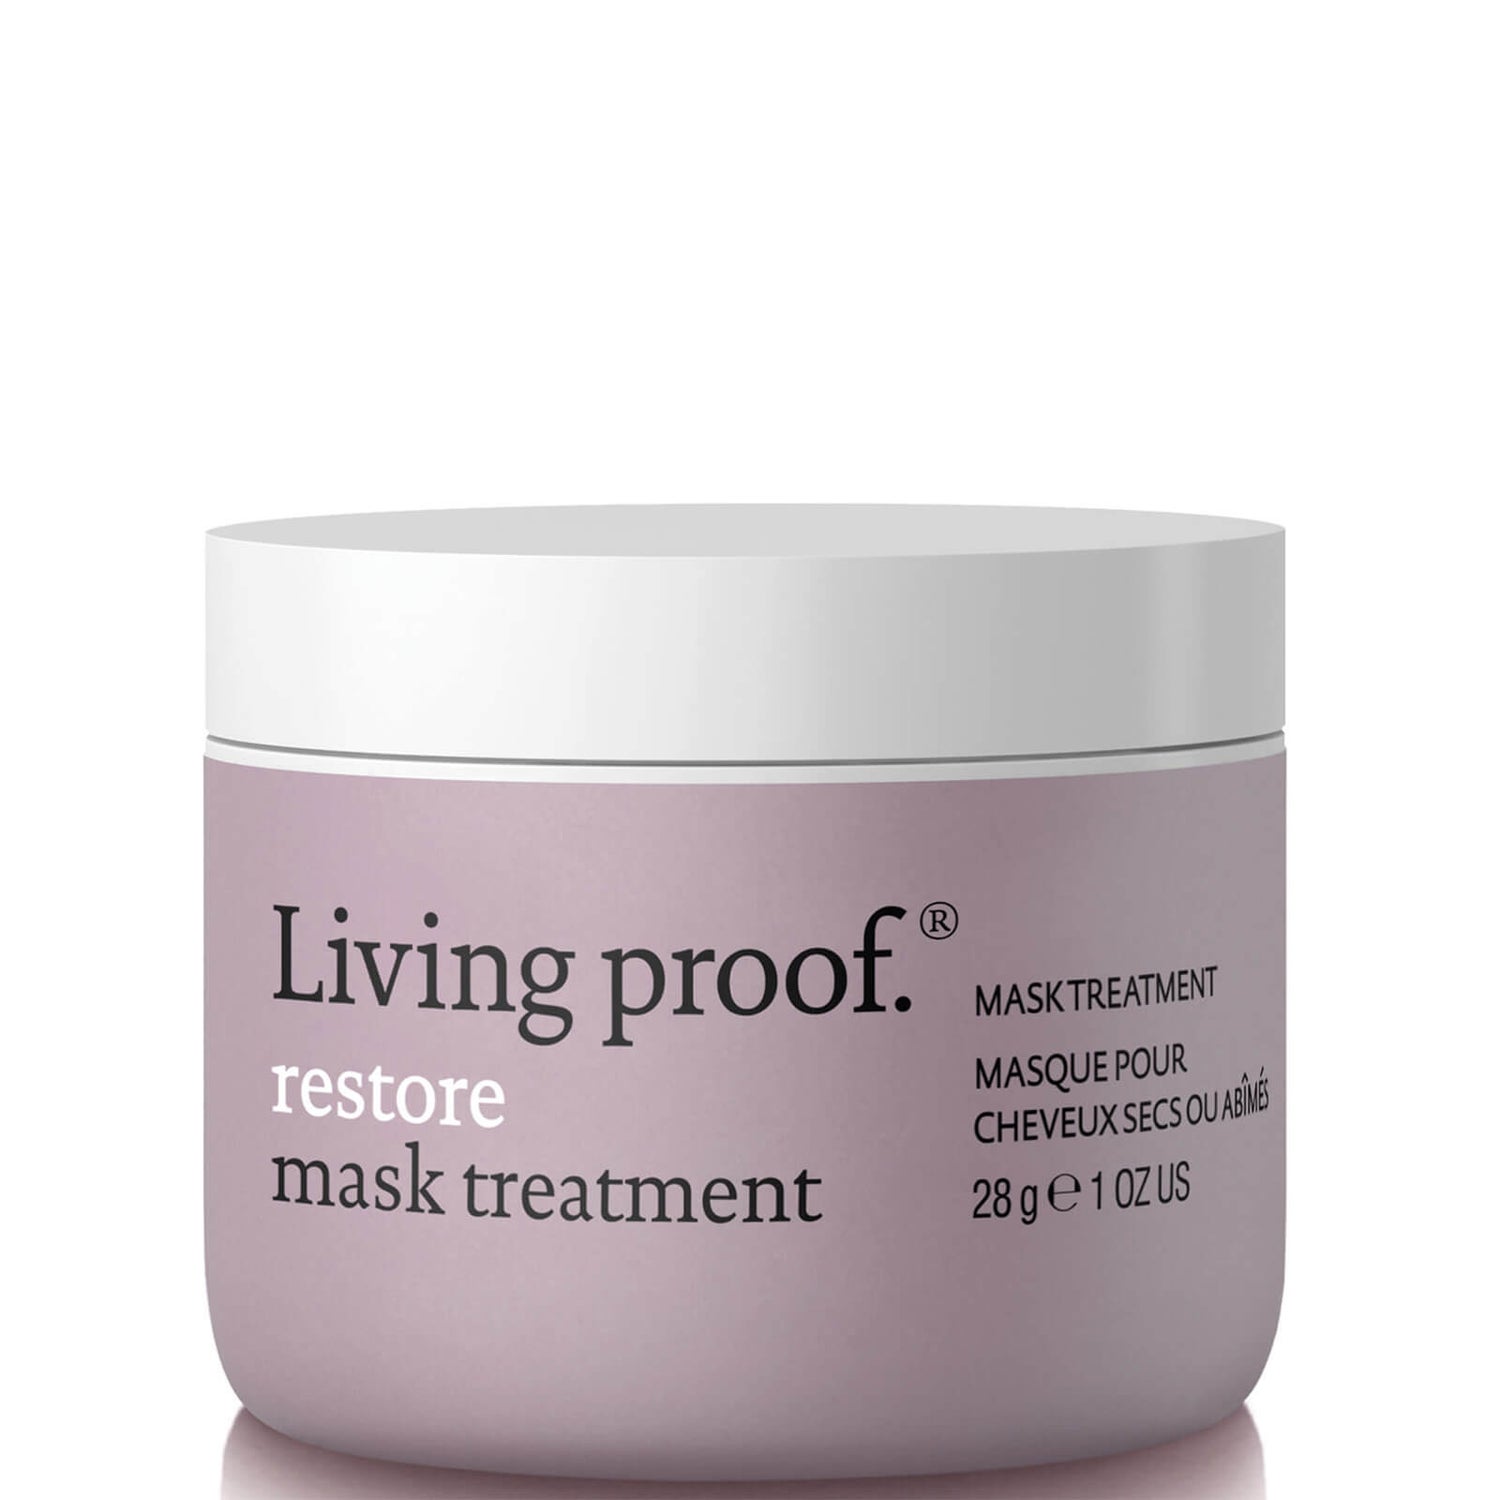 Masque Restore Living Proof 28 g